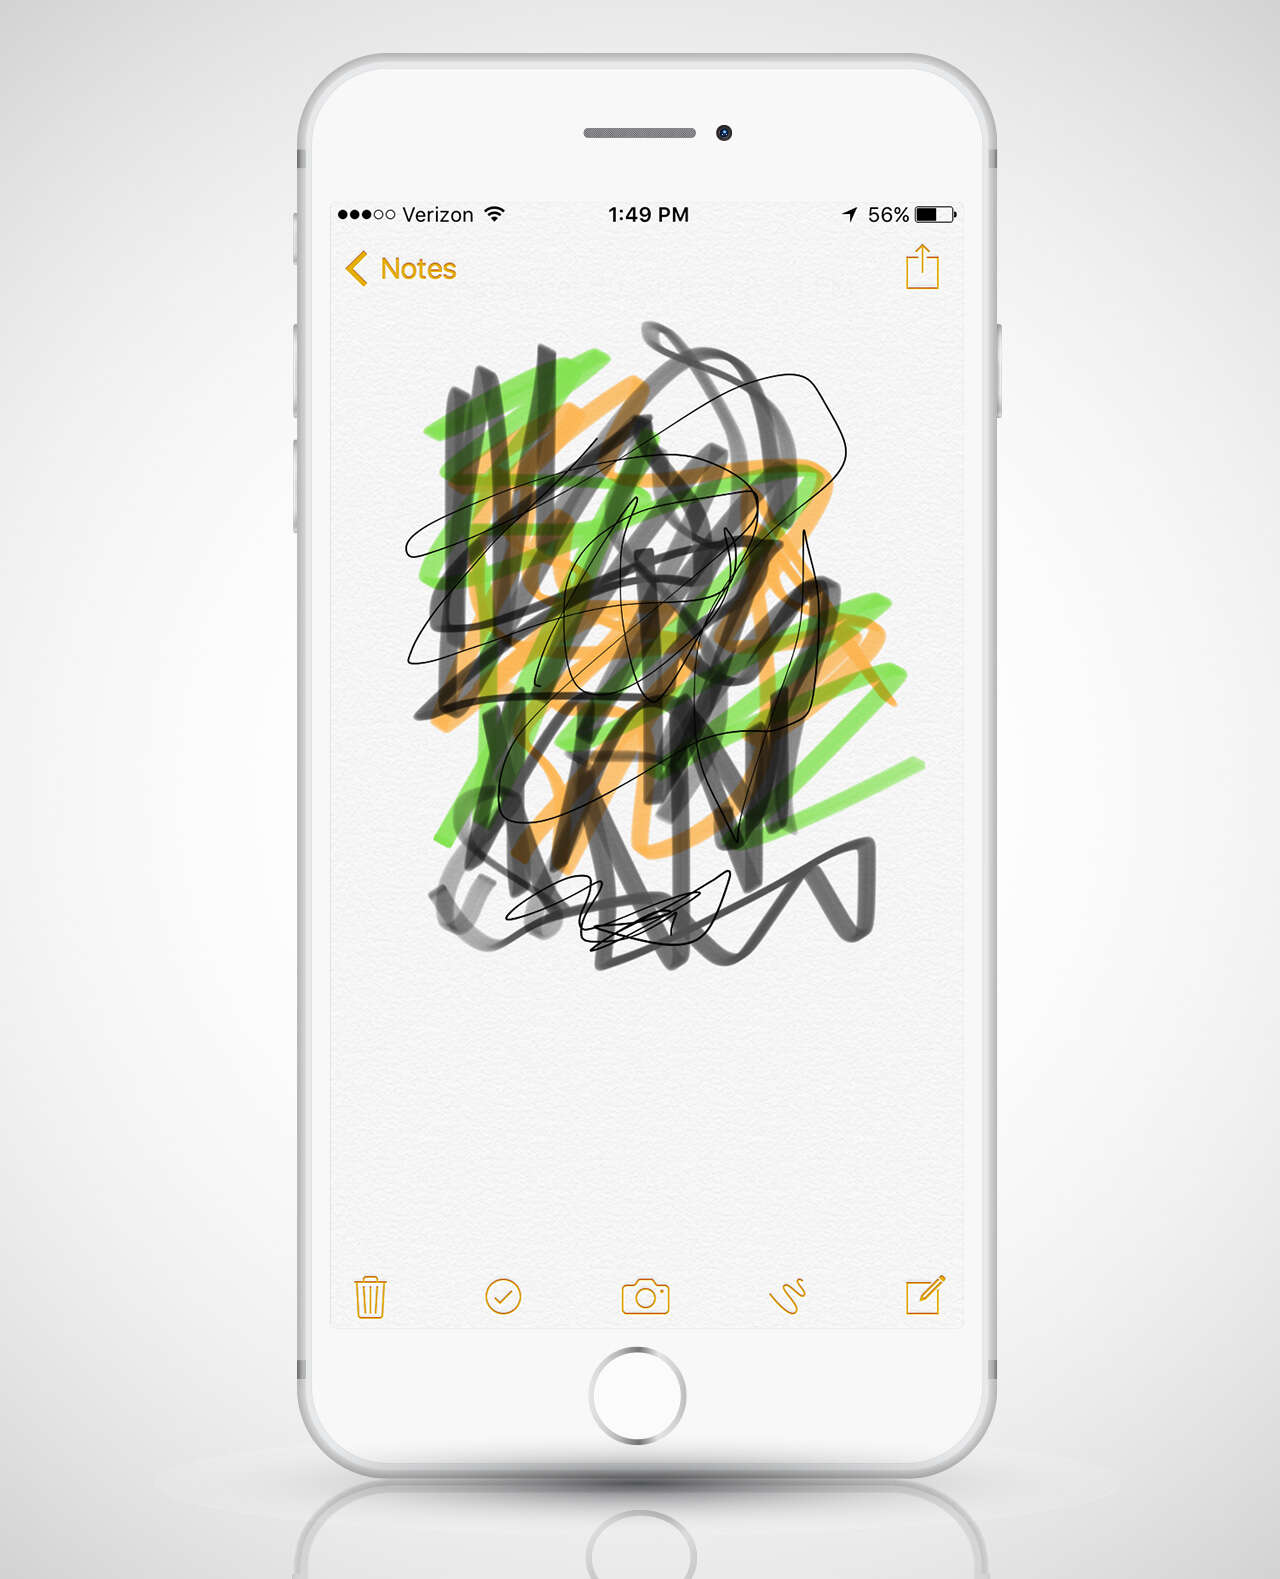 notes app screenshot in iphone 6